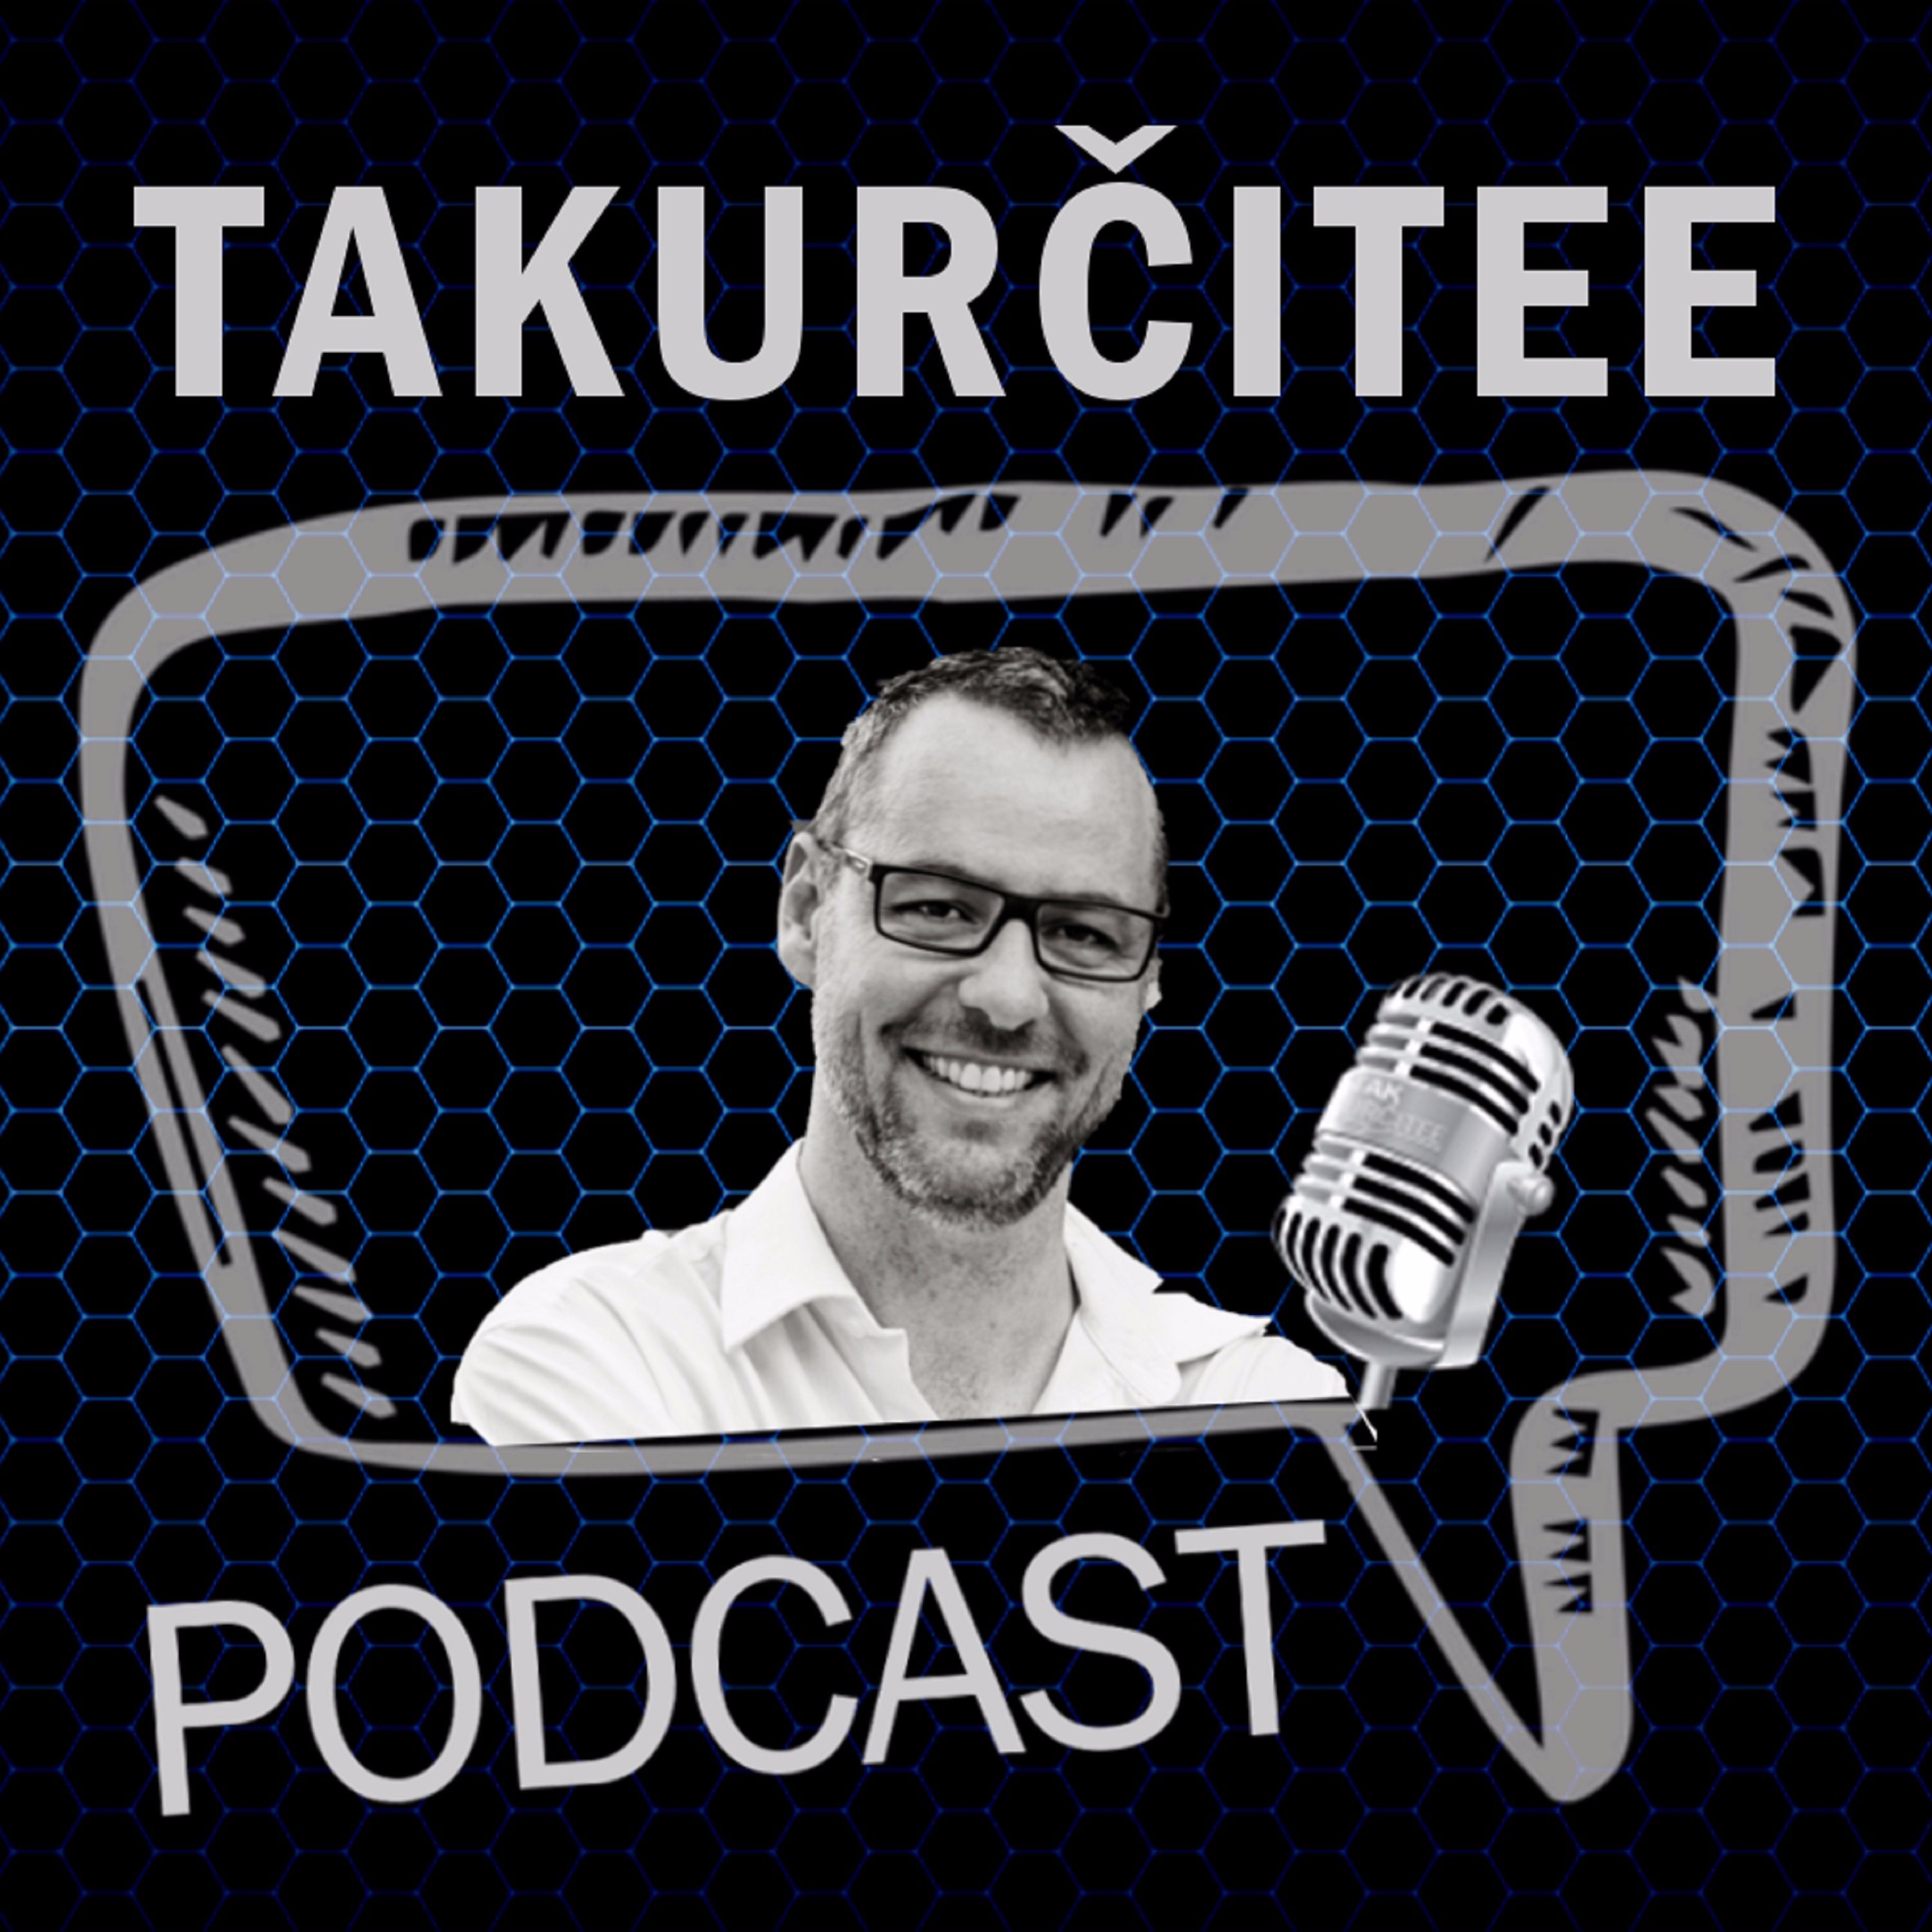 TakUrčitee Podcast, Ep.1: Tenisový svet